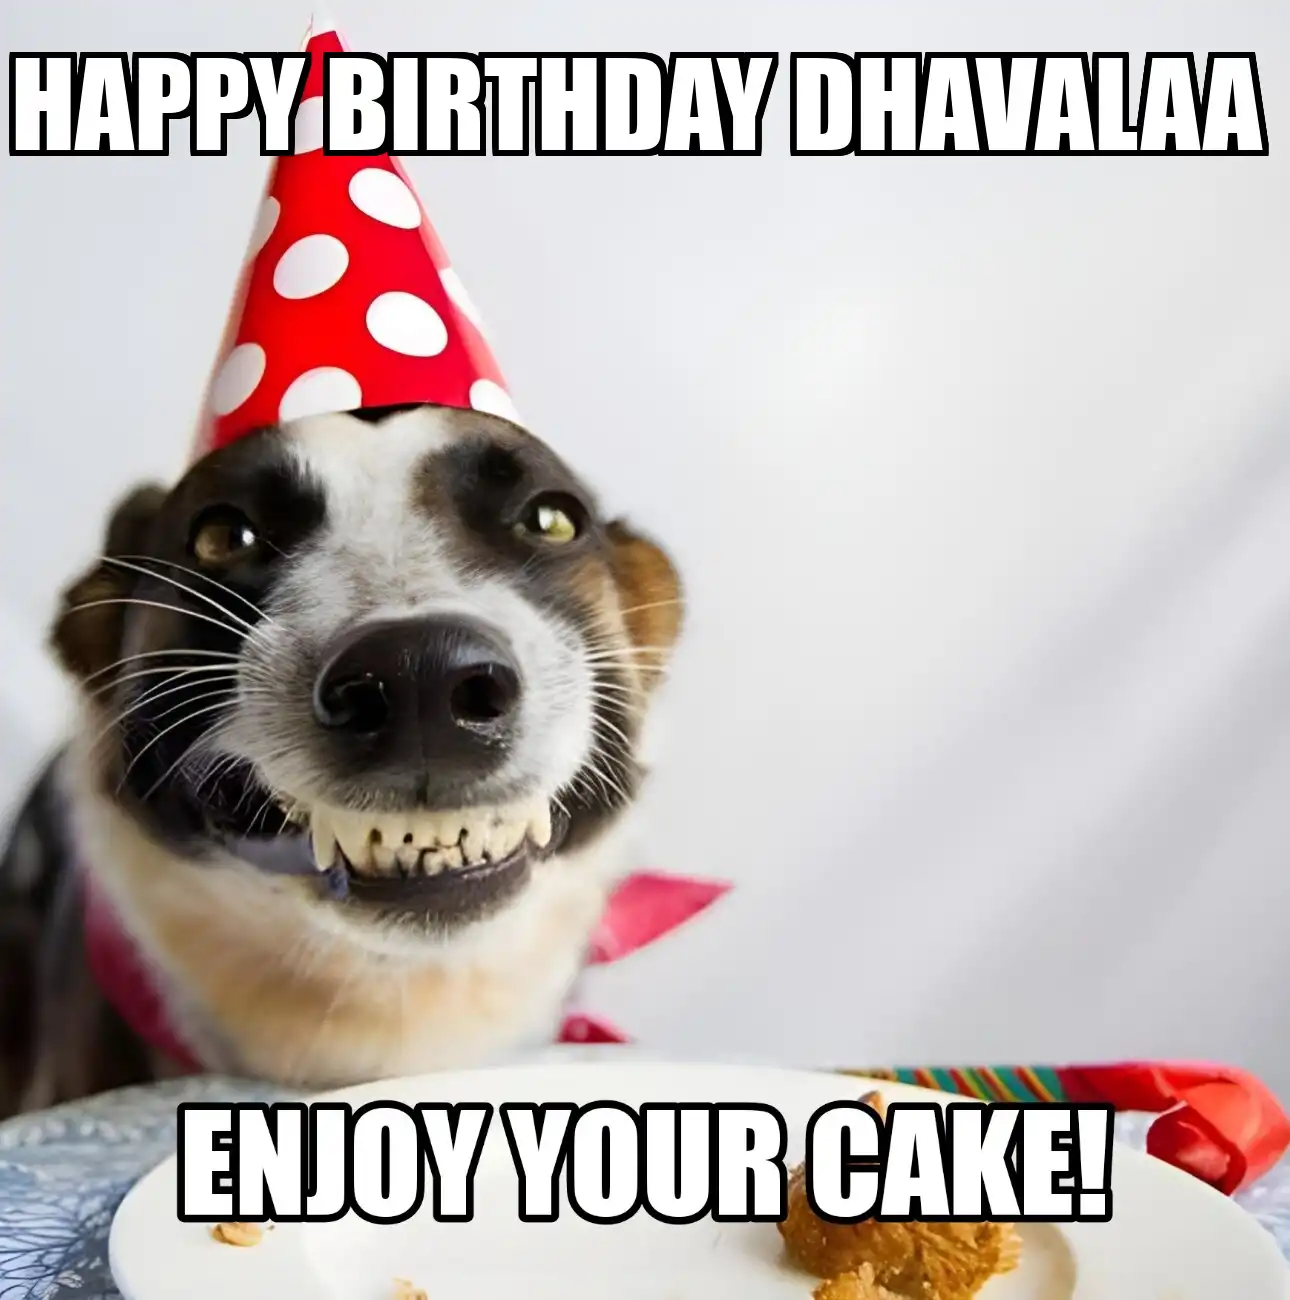 Happy Birthday Dhavalaa Enjoy Your Cake Dog Meme